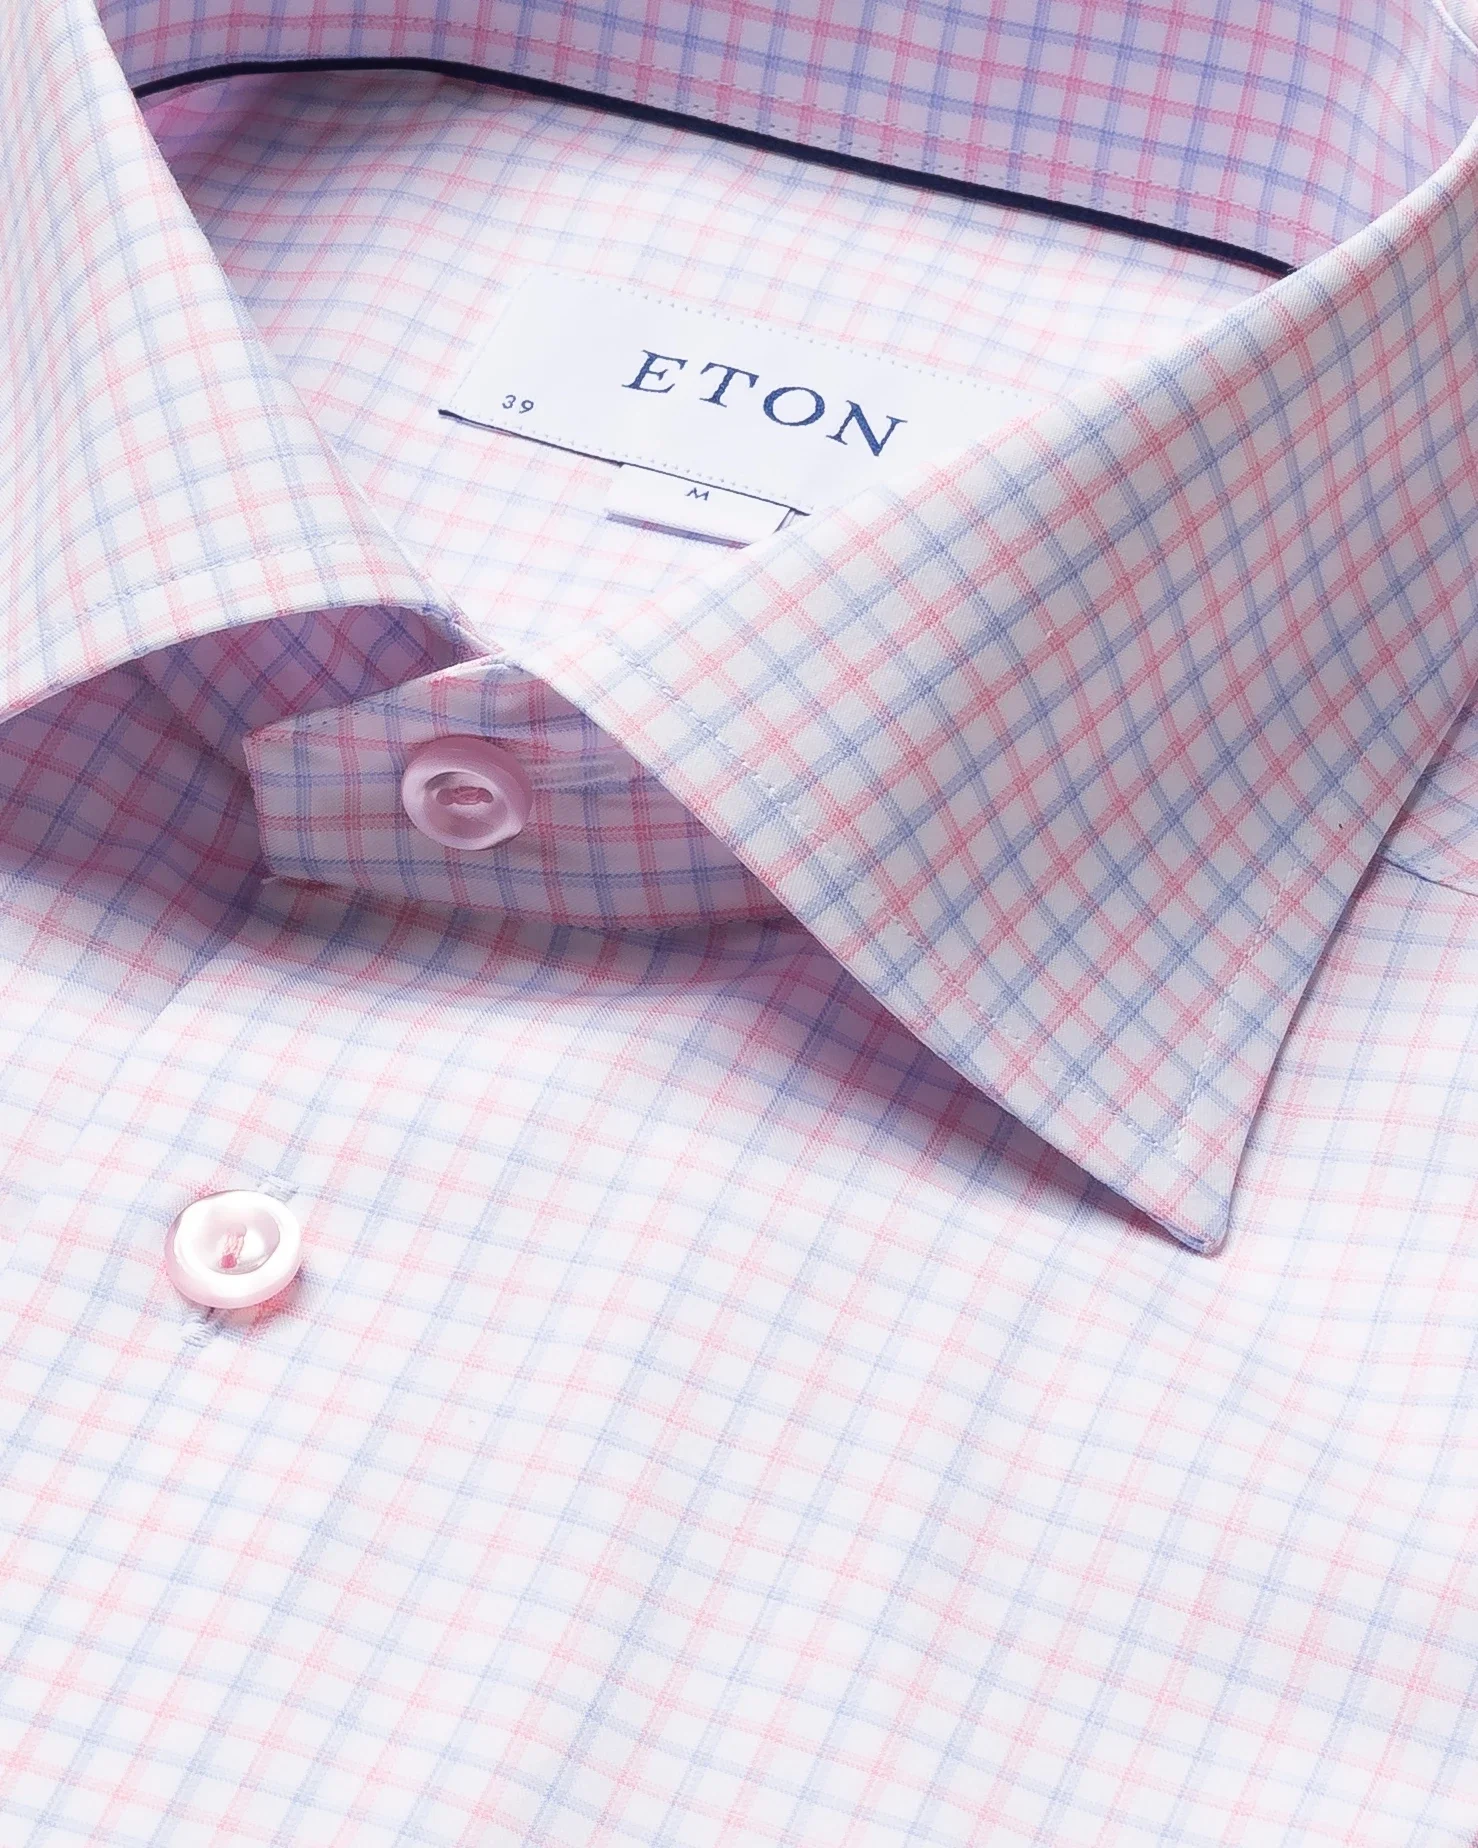 Eton - pink checked fine twill shirt cut away